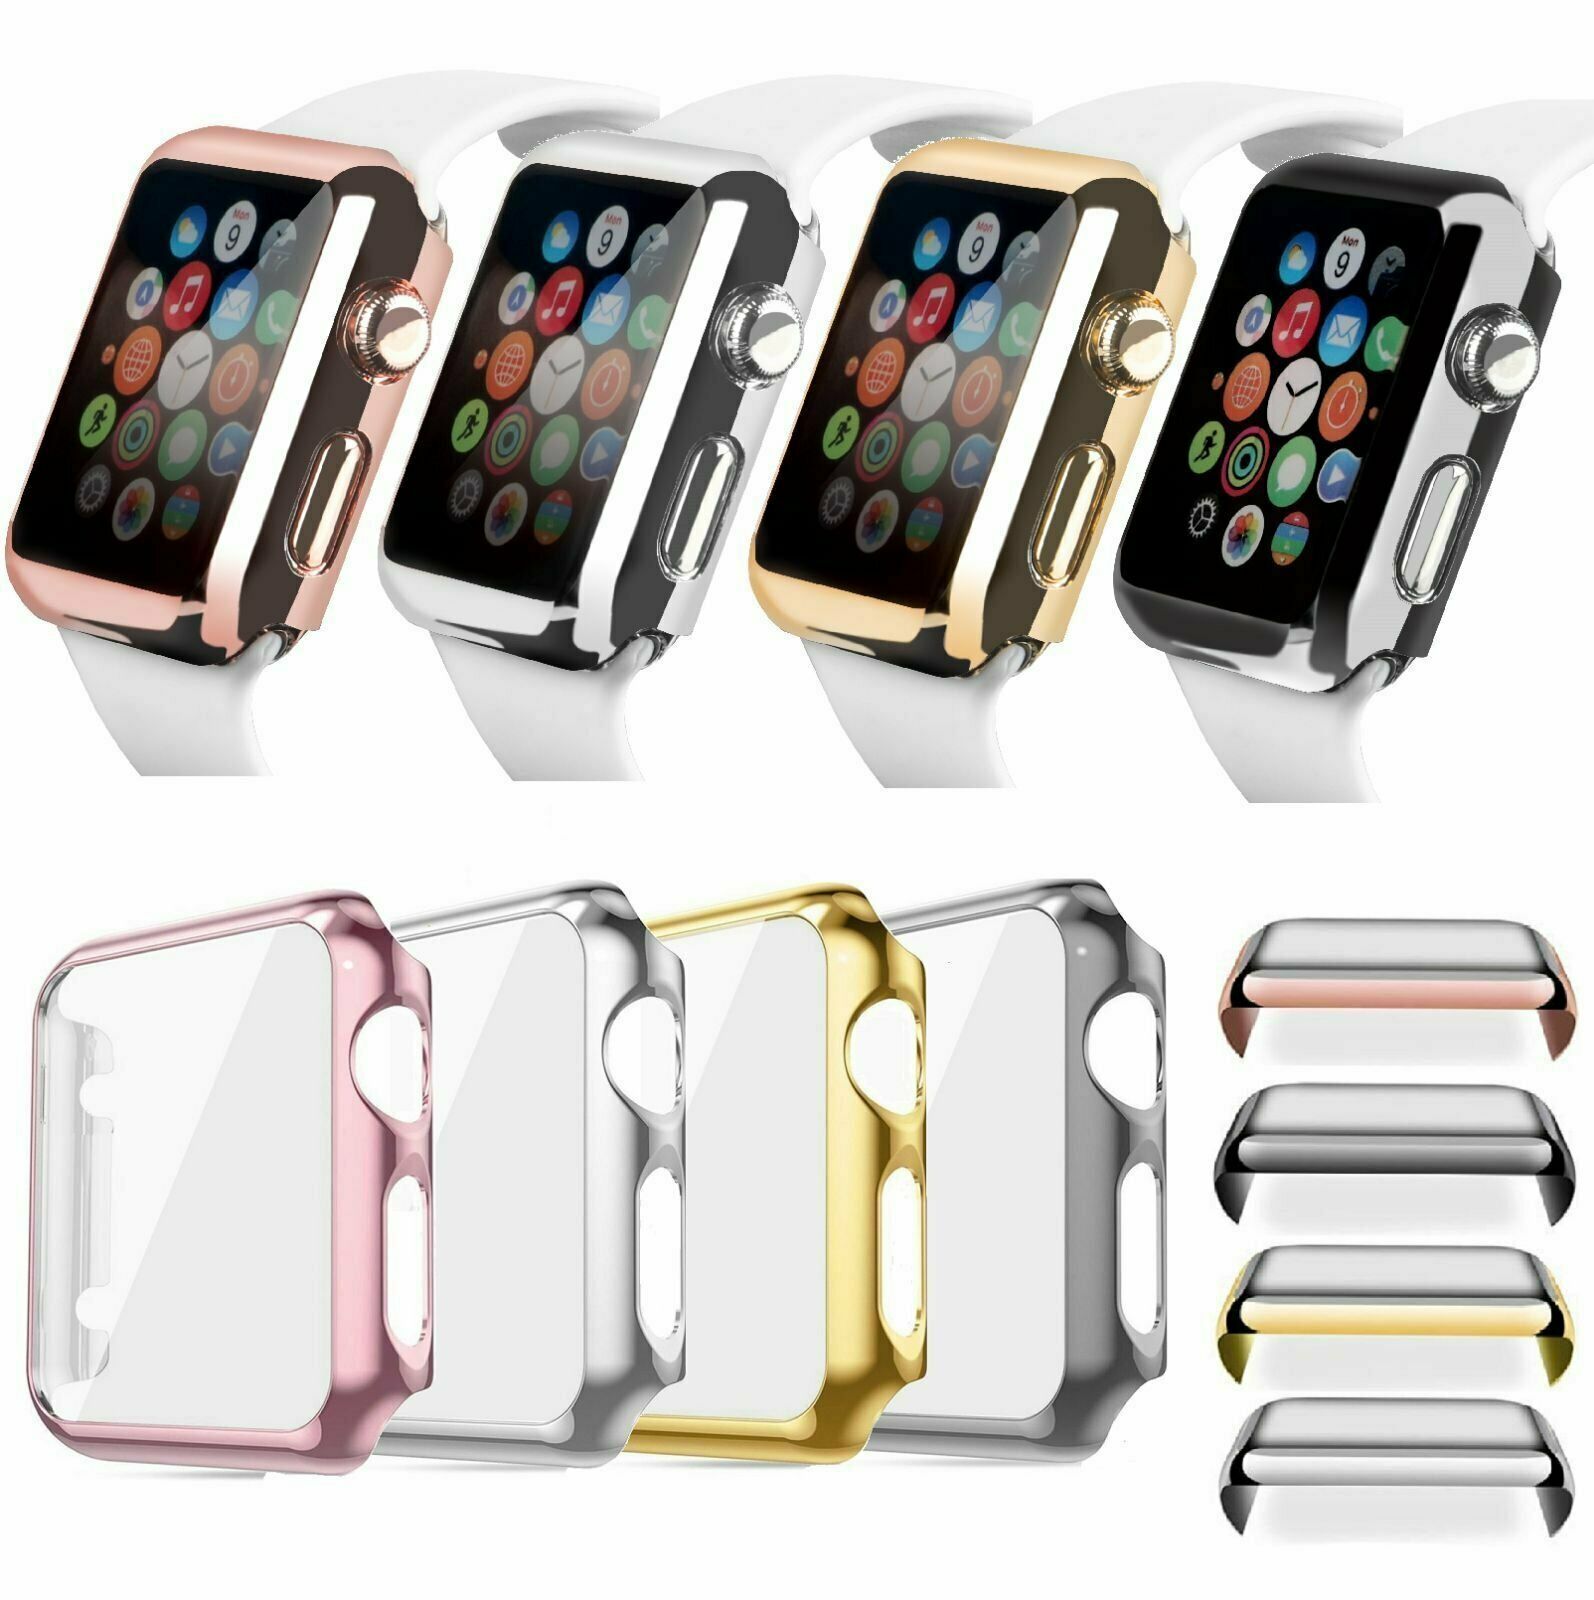 Apple Watch 2 3 4 38 42MM 40 44MM Full Cover Snap On Case Screen Protector lilyann76lilyann76 